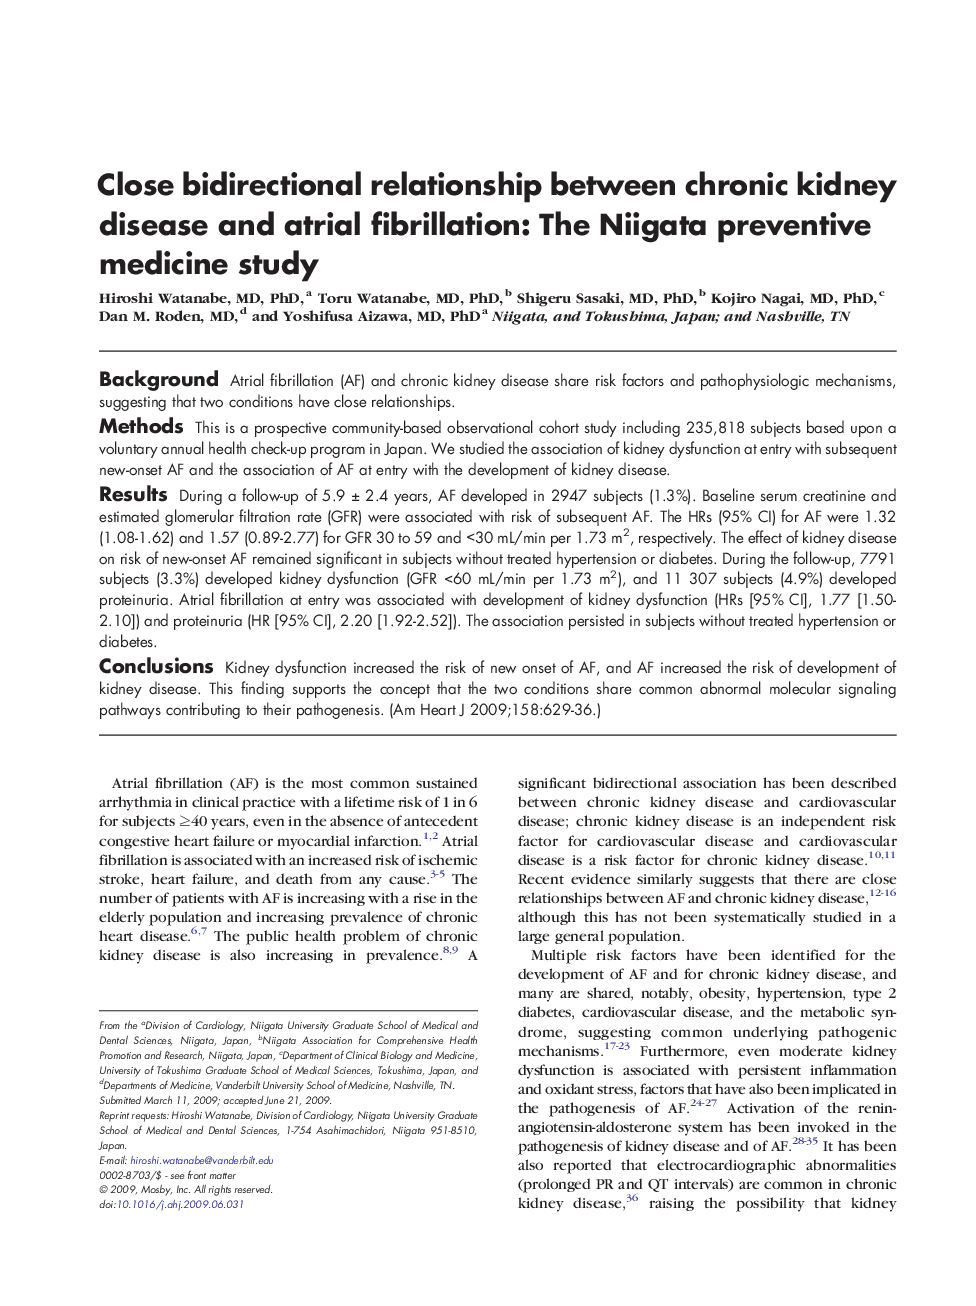 Close bidirectional relationship between chronic kidney disease and atrial fibrillation: The Niigata preventive medicine study